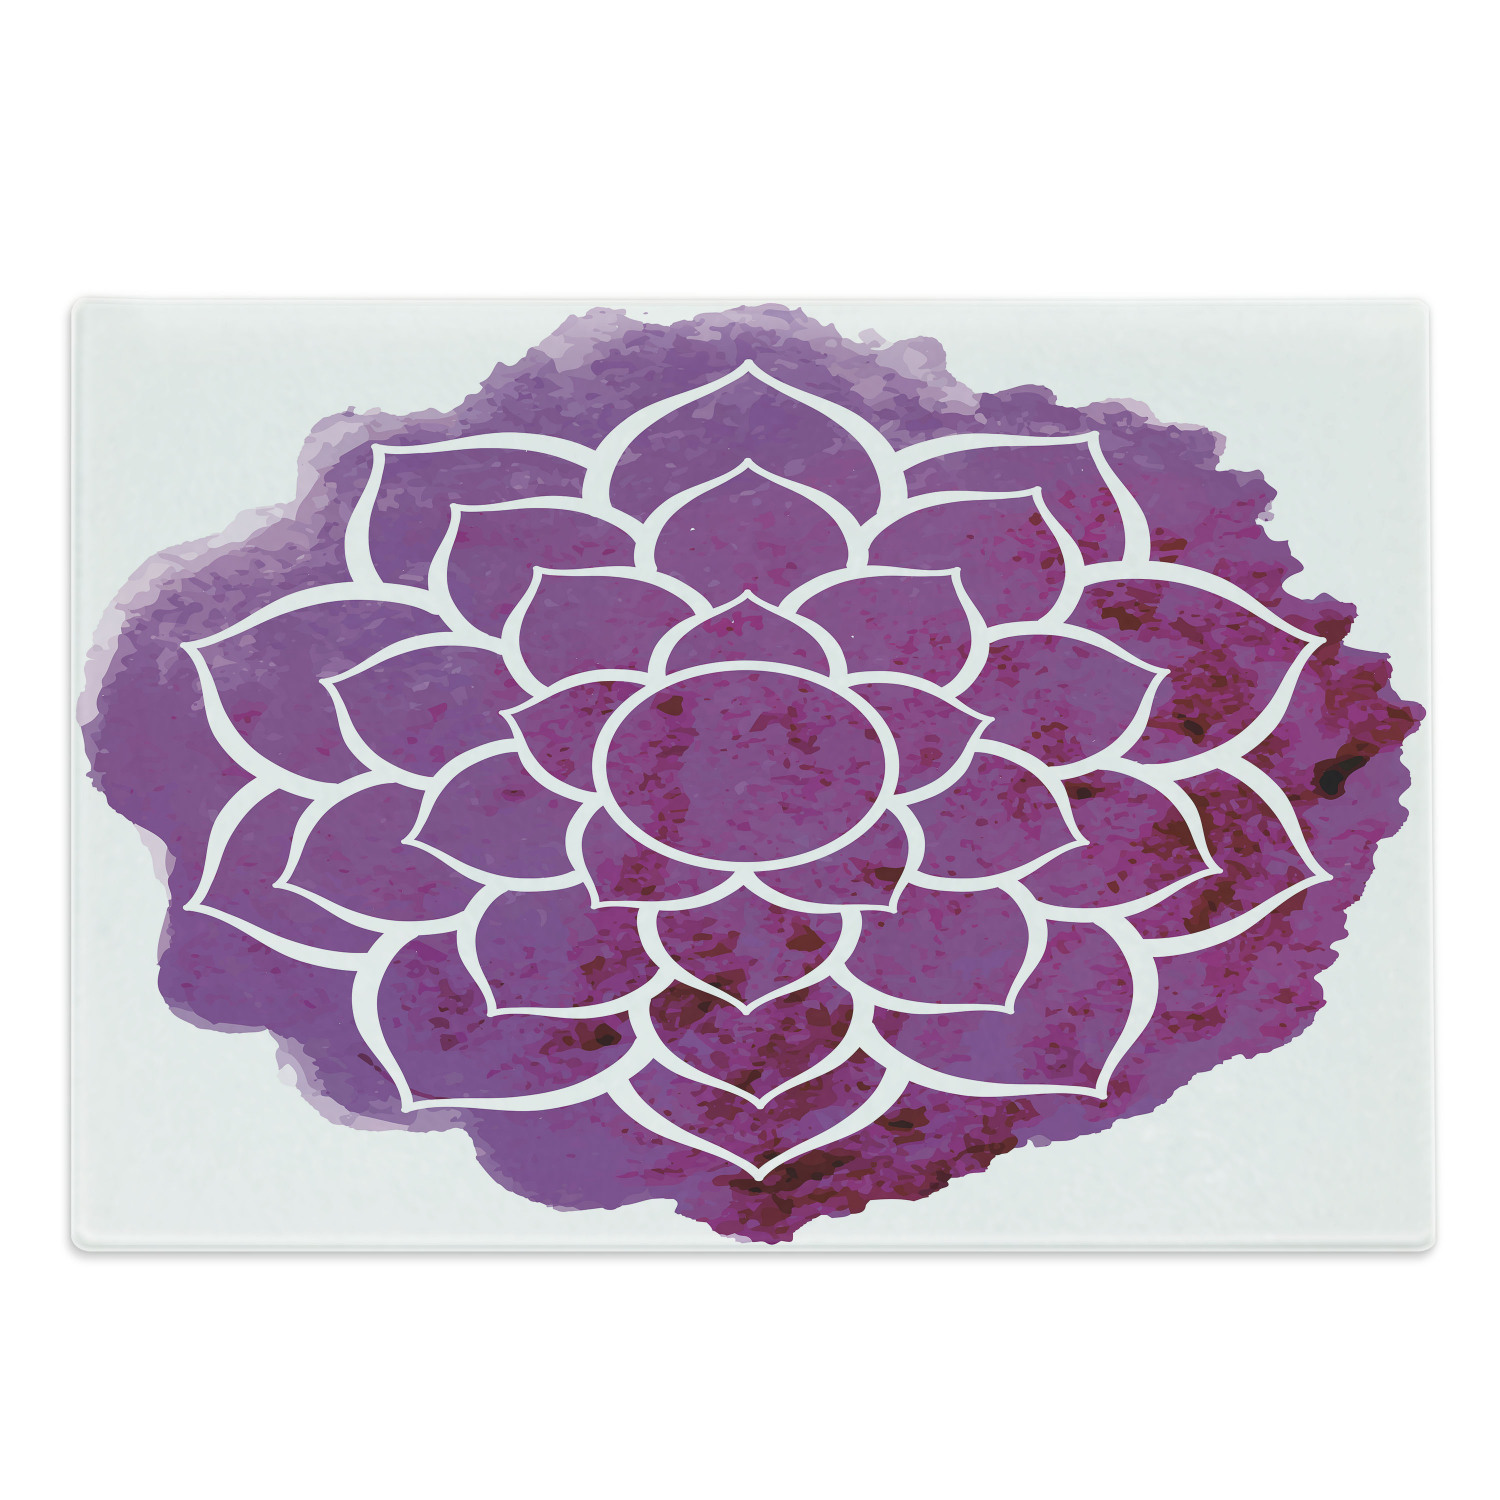 Purple Mandala Cutting Board, Watercolor Lotus Flower Yoga Boho Style Painbrush Art, Decorative Tempered Glass Cutting and Serving Board, Large Size, Fuchsia White, by Ambesonne - image 1 of 1